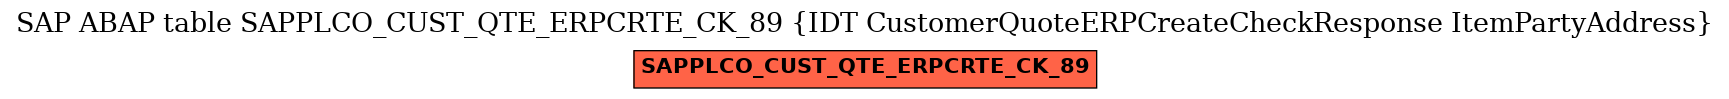 E-R Diagram for table SAPPLCO_CUST_QTE_ERPCRTE_CK_89 (IDT CustomerQuoteERPCreateCheckResponse ItemPartyAddress)